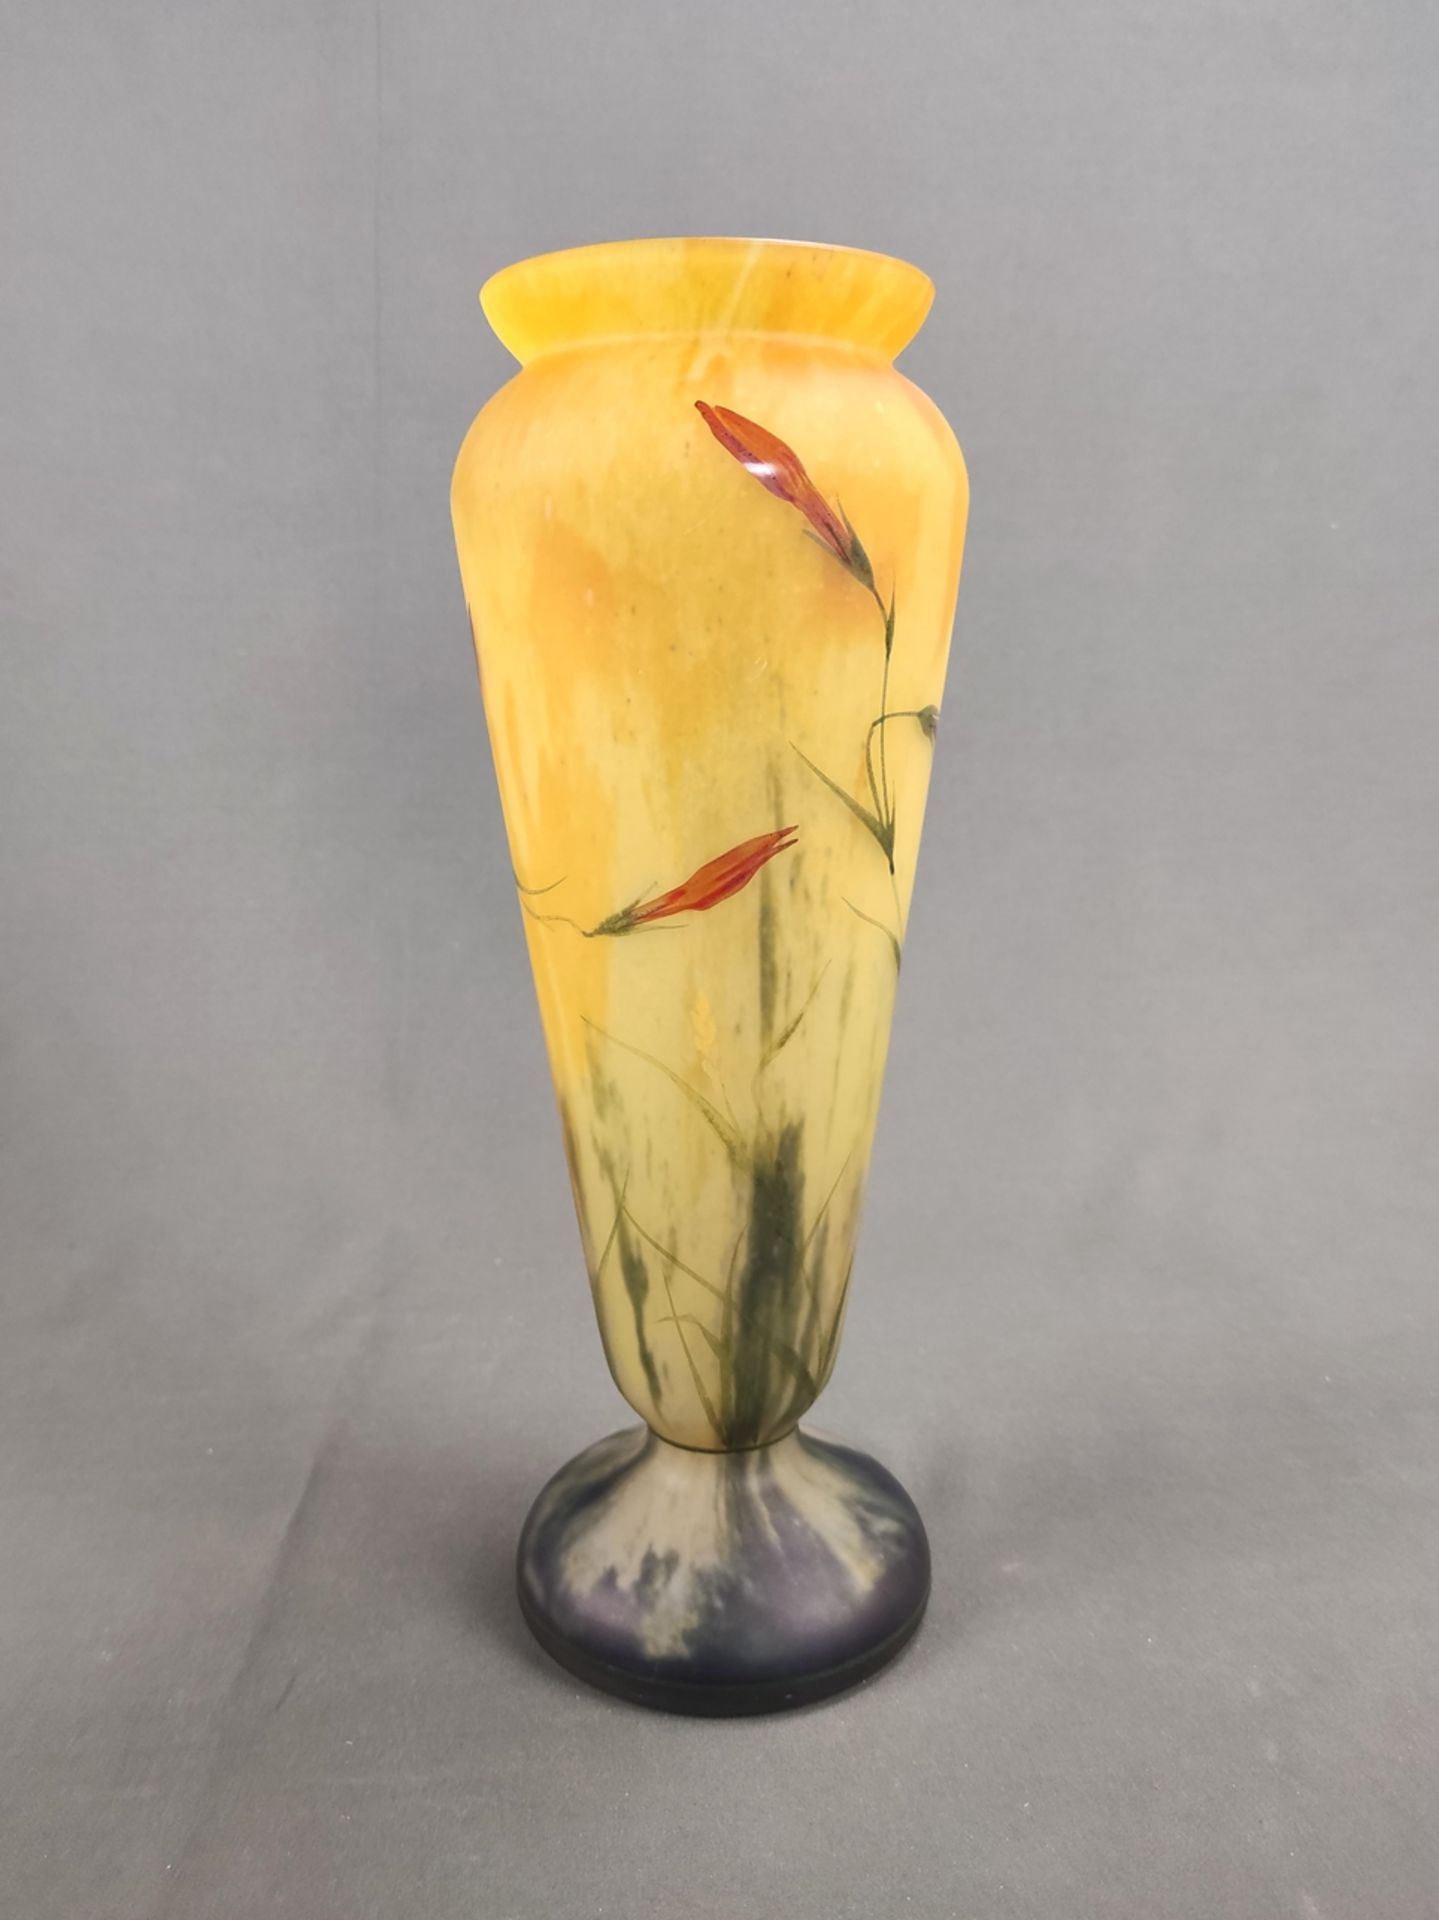 Vase Verrerie Belle Étoile, Croismare, c. 1930, colourless glass with orange-yellow powder fusion,  - Image 3 of 4